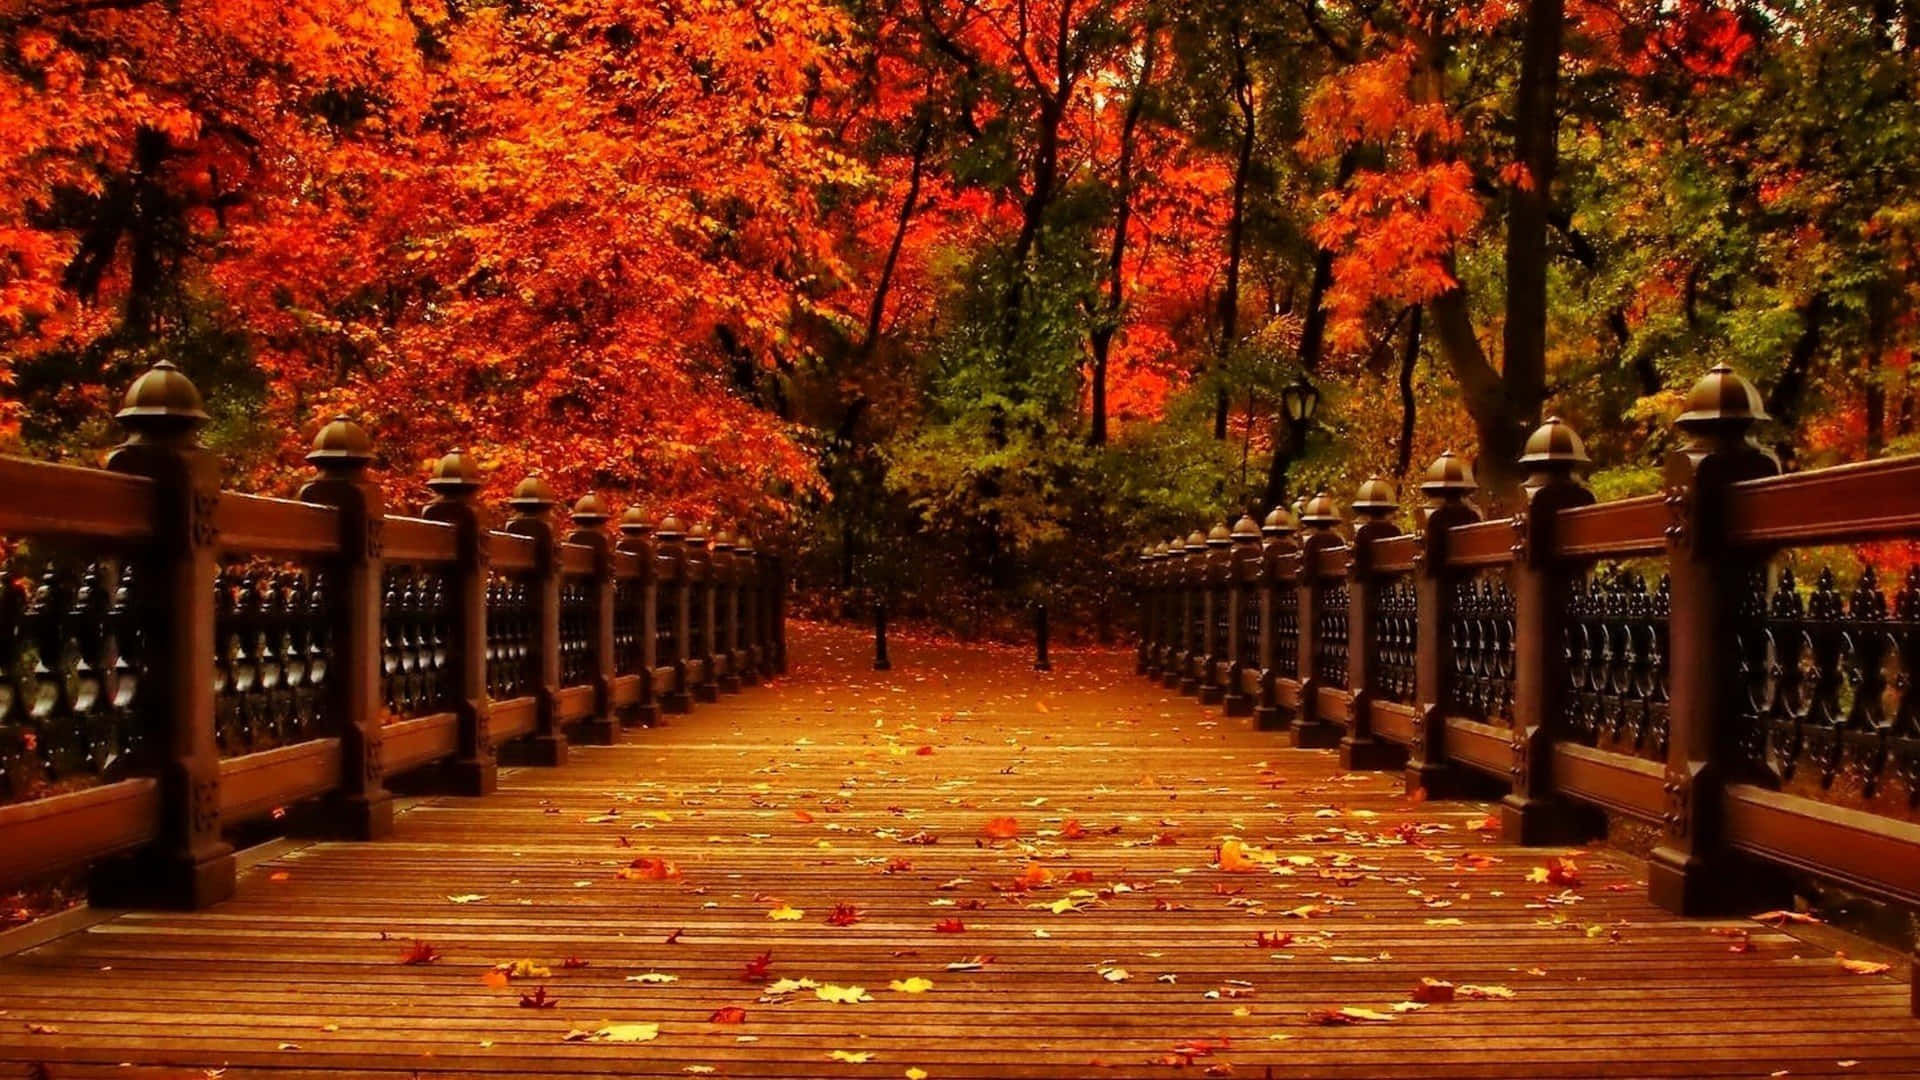 An aesthetically beautiful fall scene